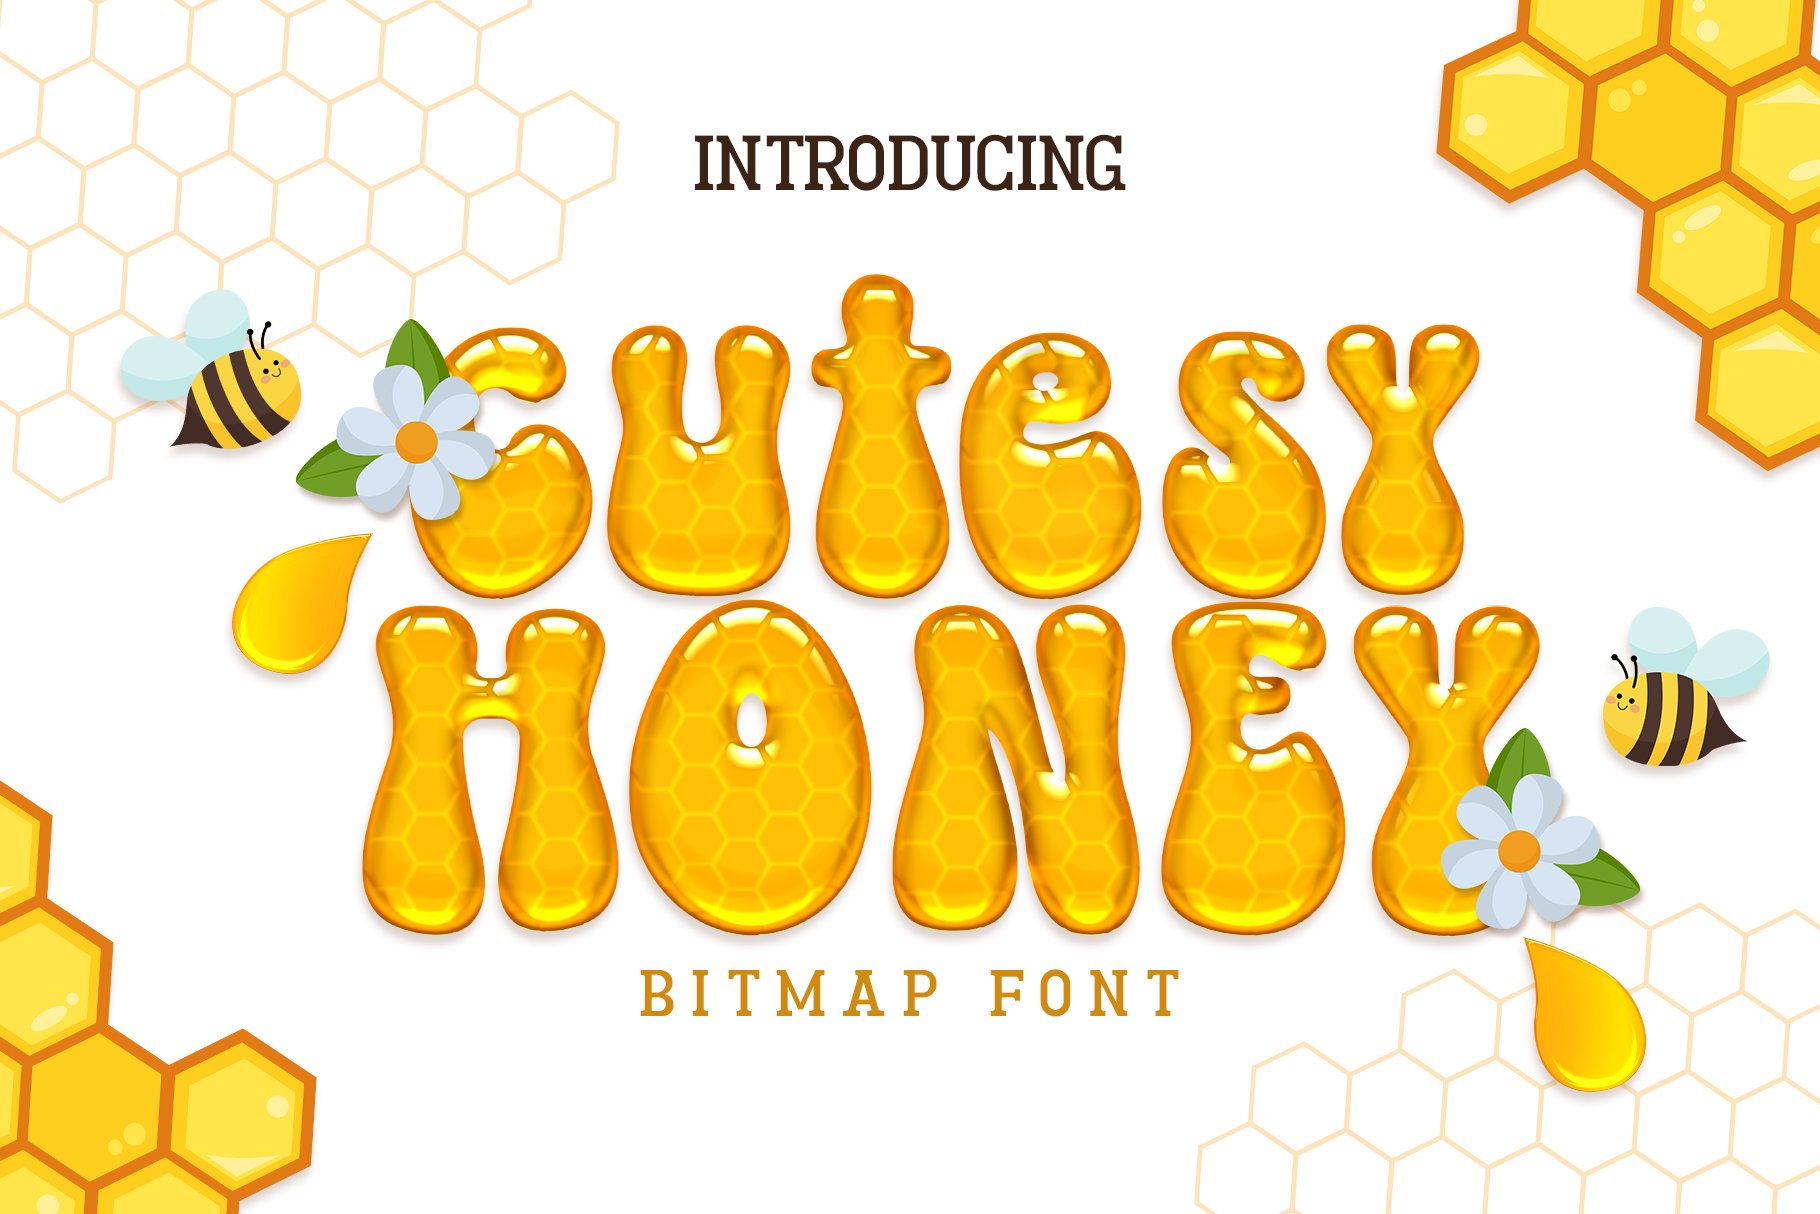 Cutesy Honey Bitmap Font cover image.